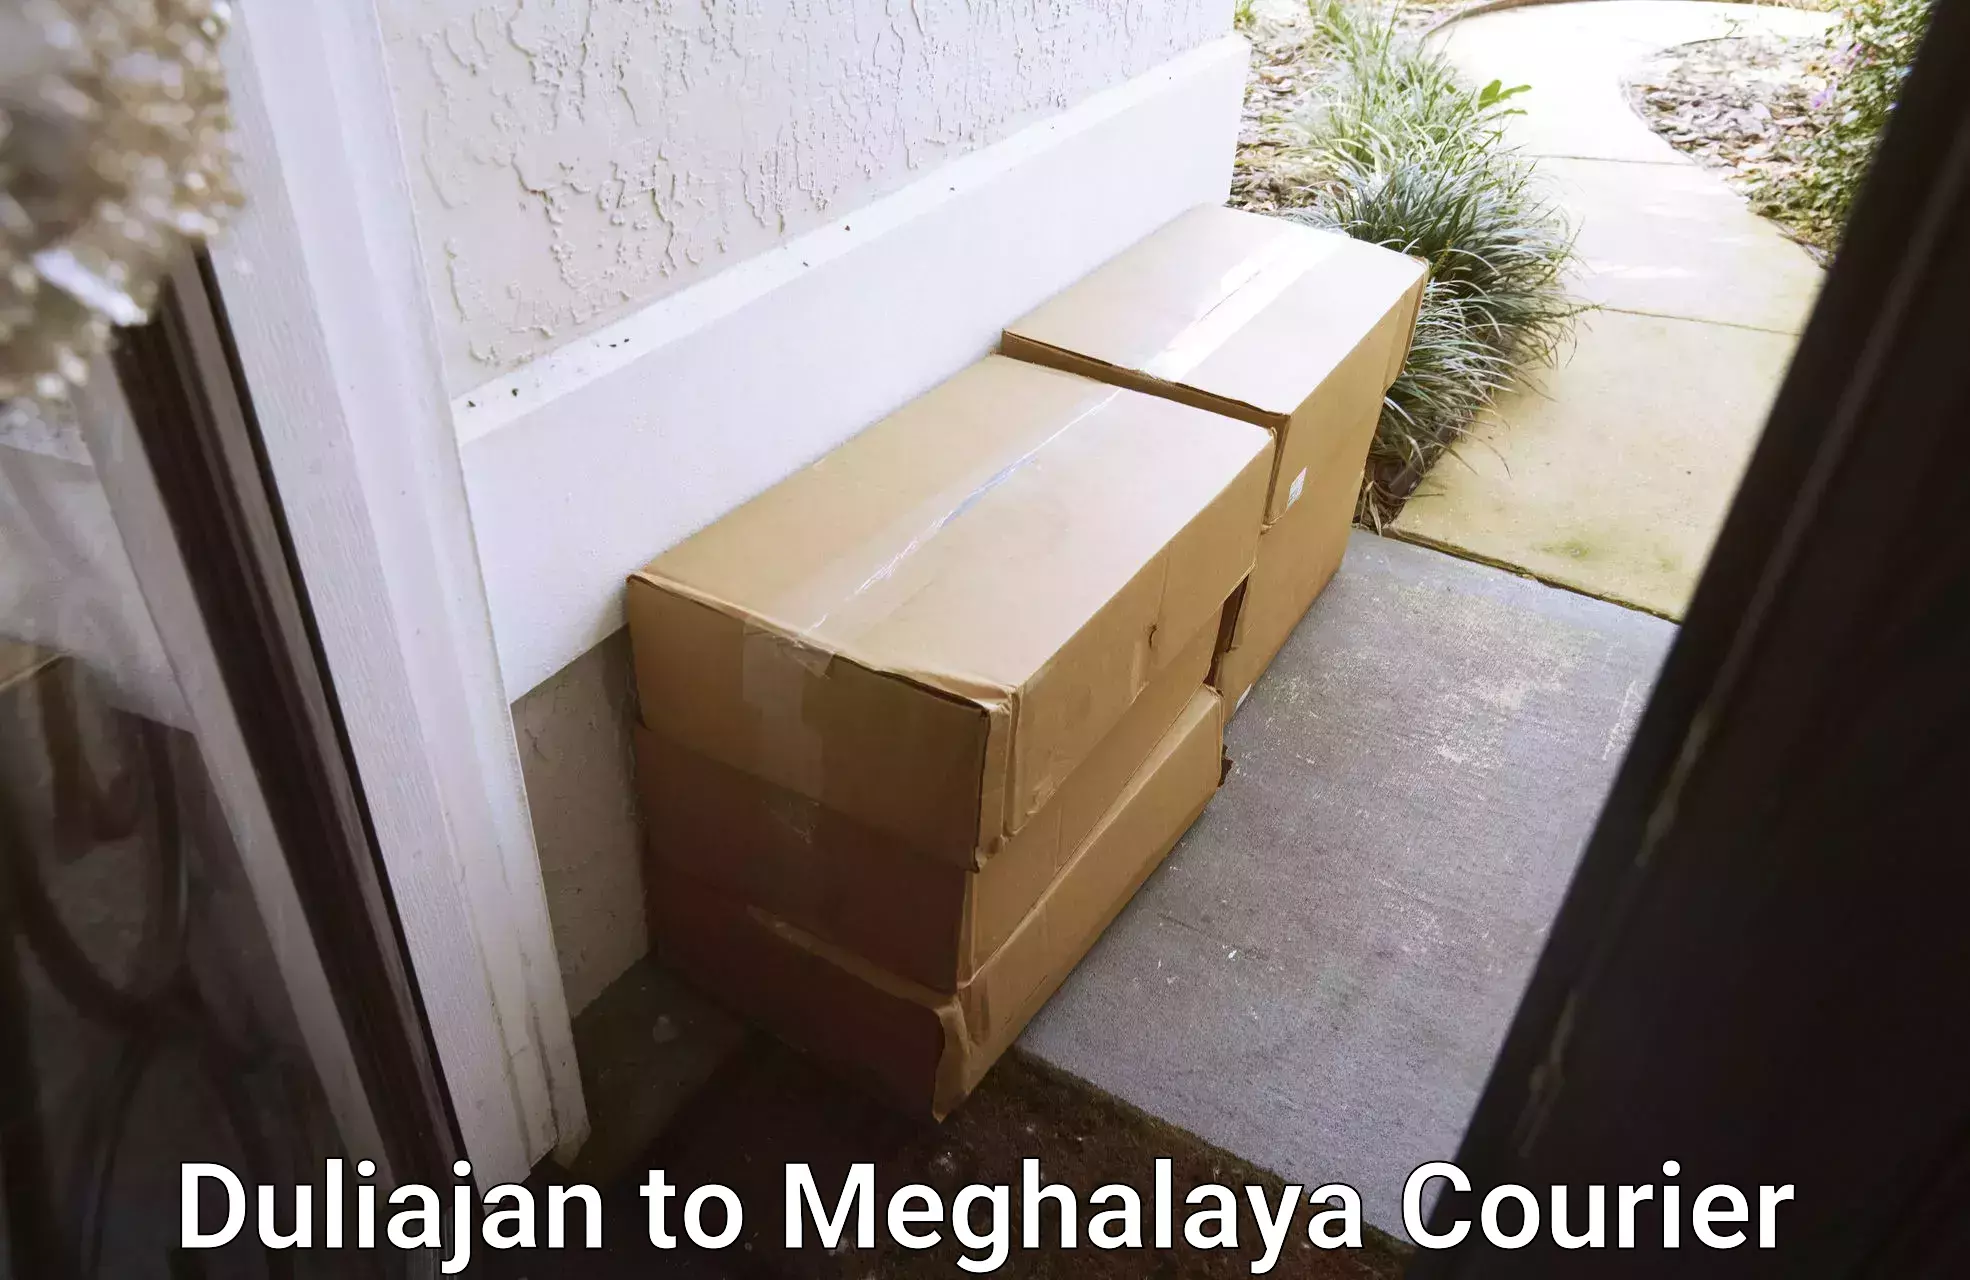 High-speed parcel service Duliajan to Jowai